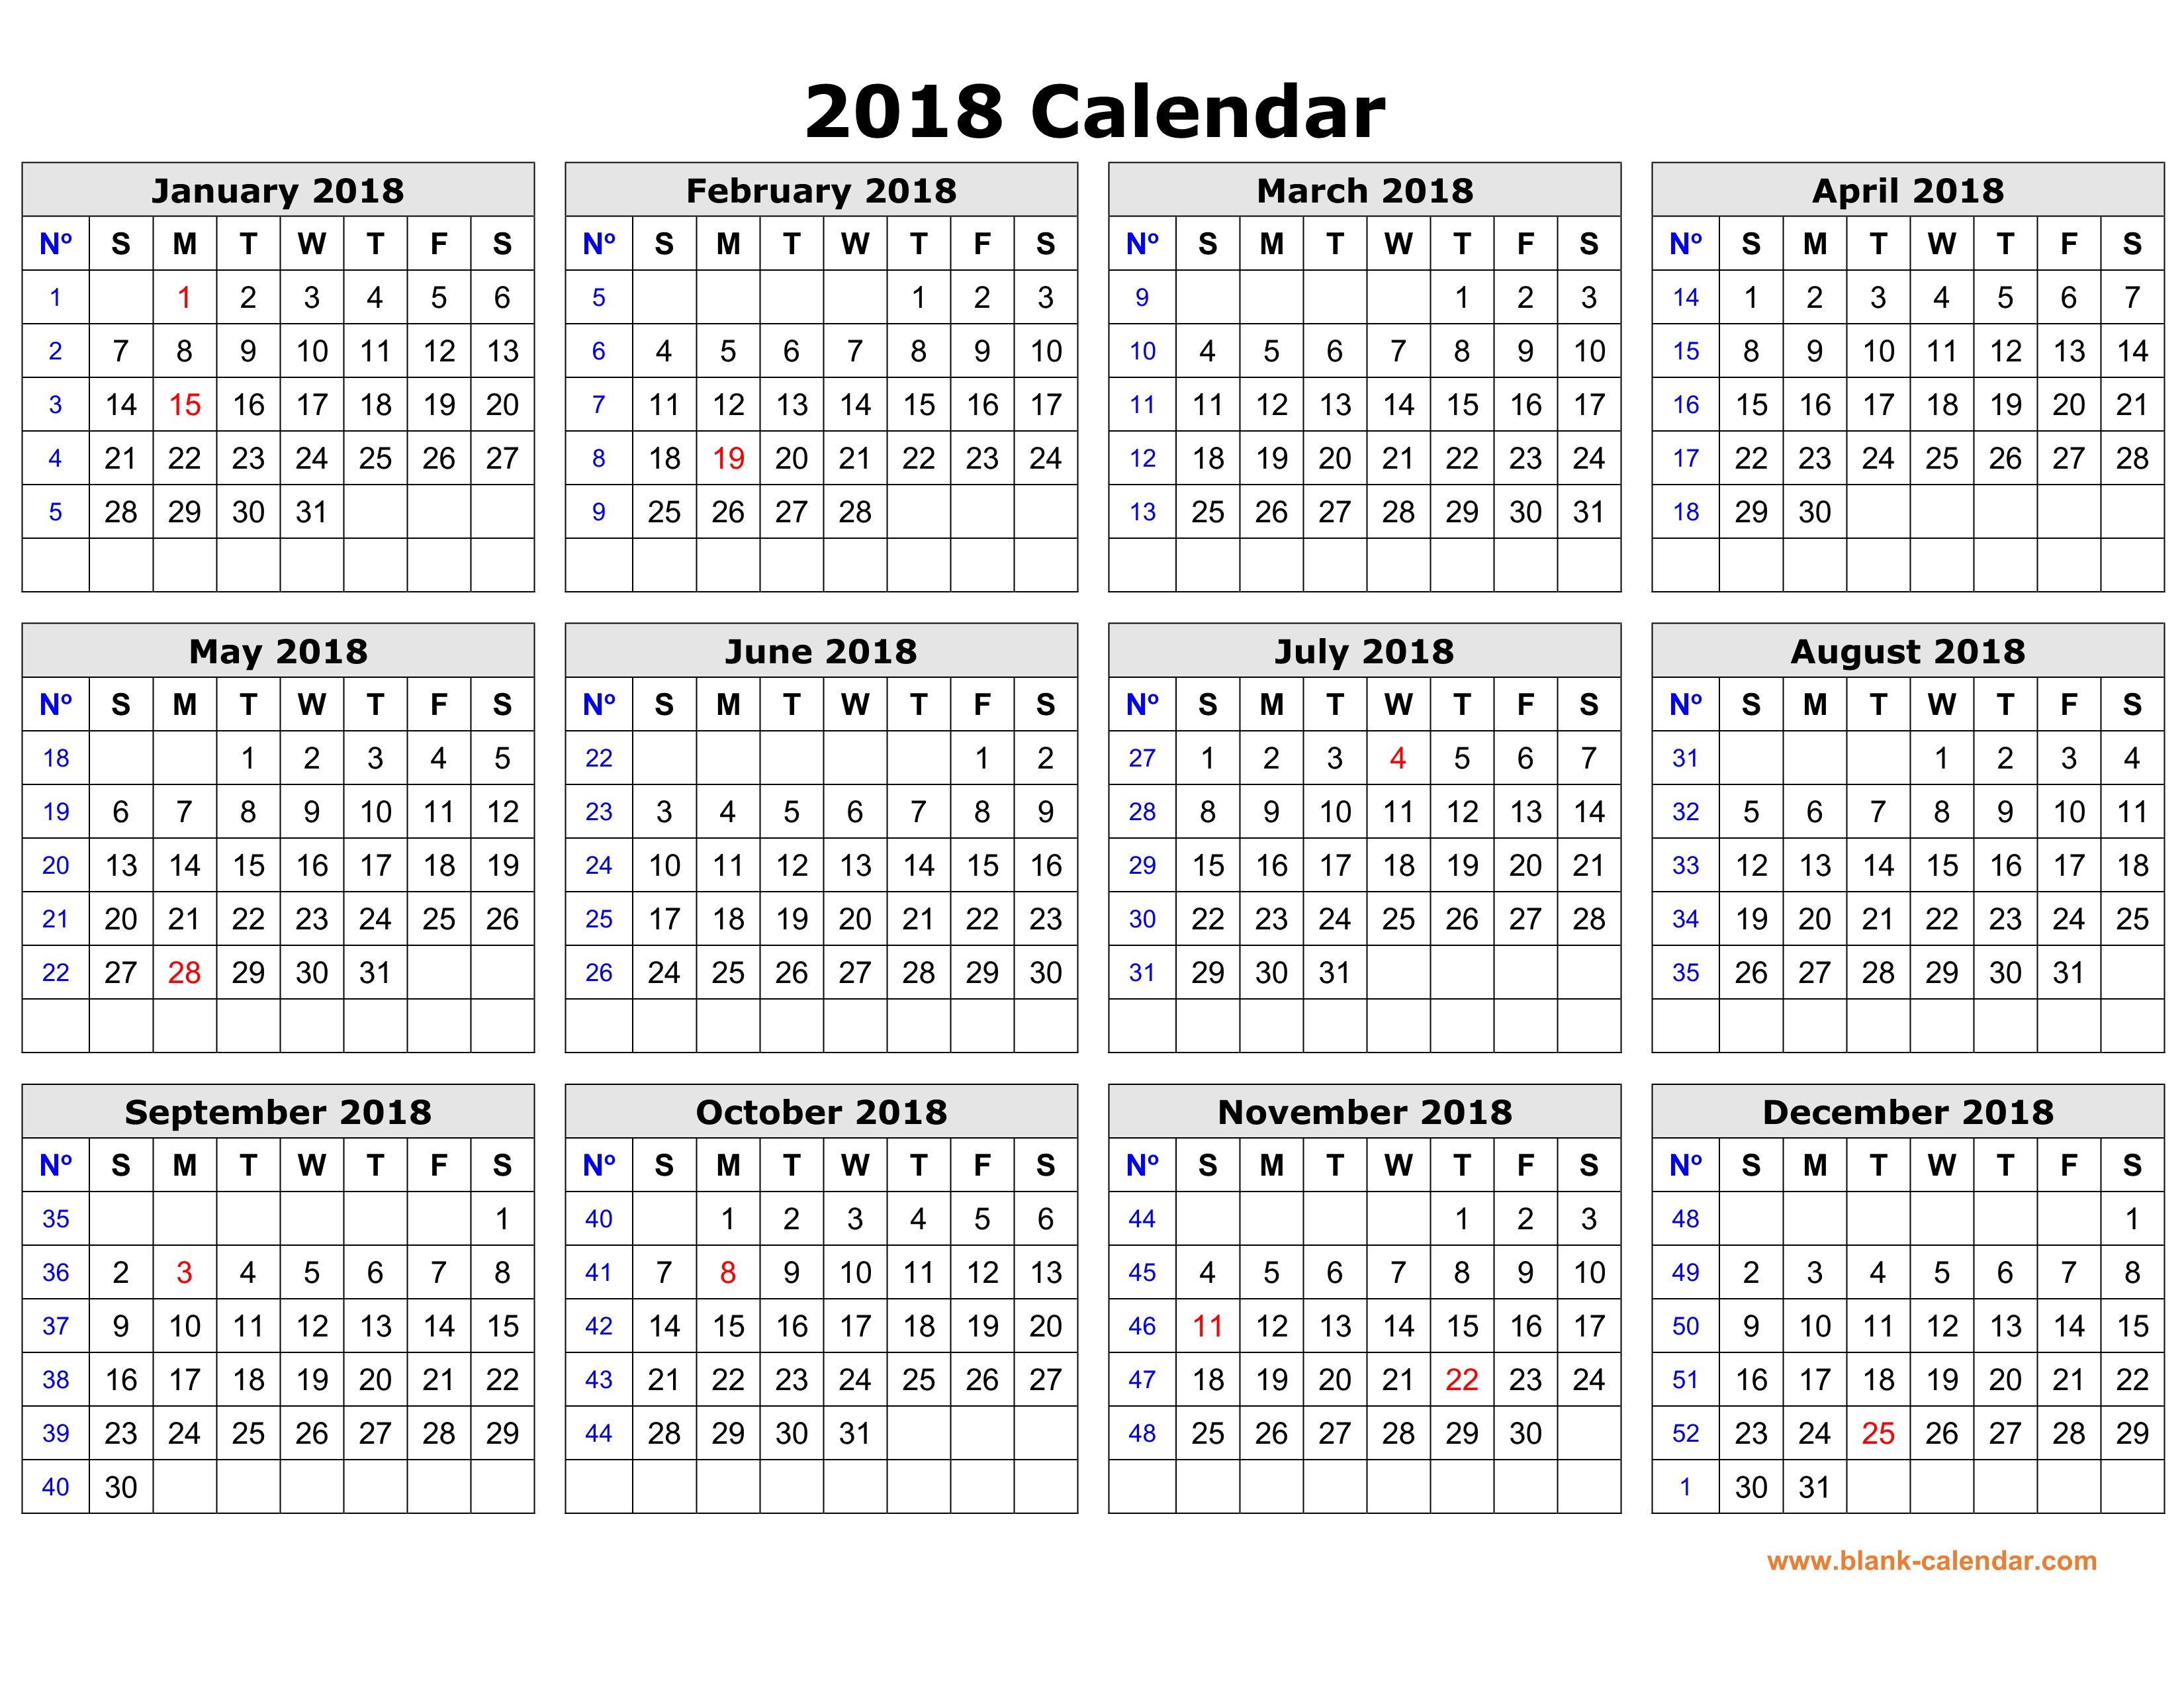 Blank Calendar 2018 Yearly 2018 Calendar Blank Portrait Skjlcc